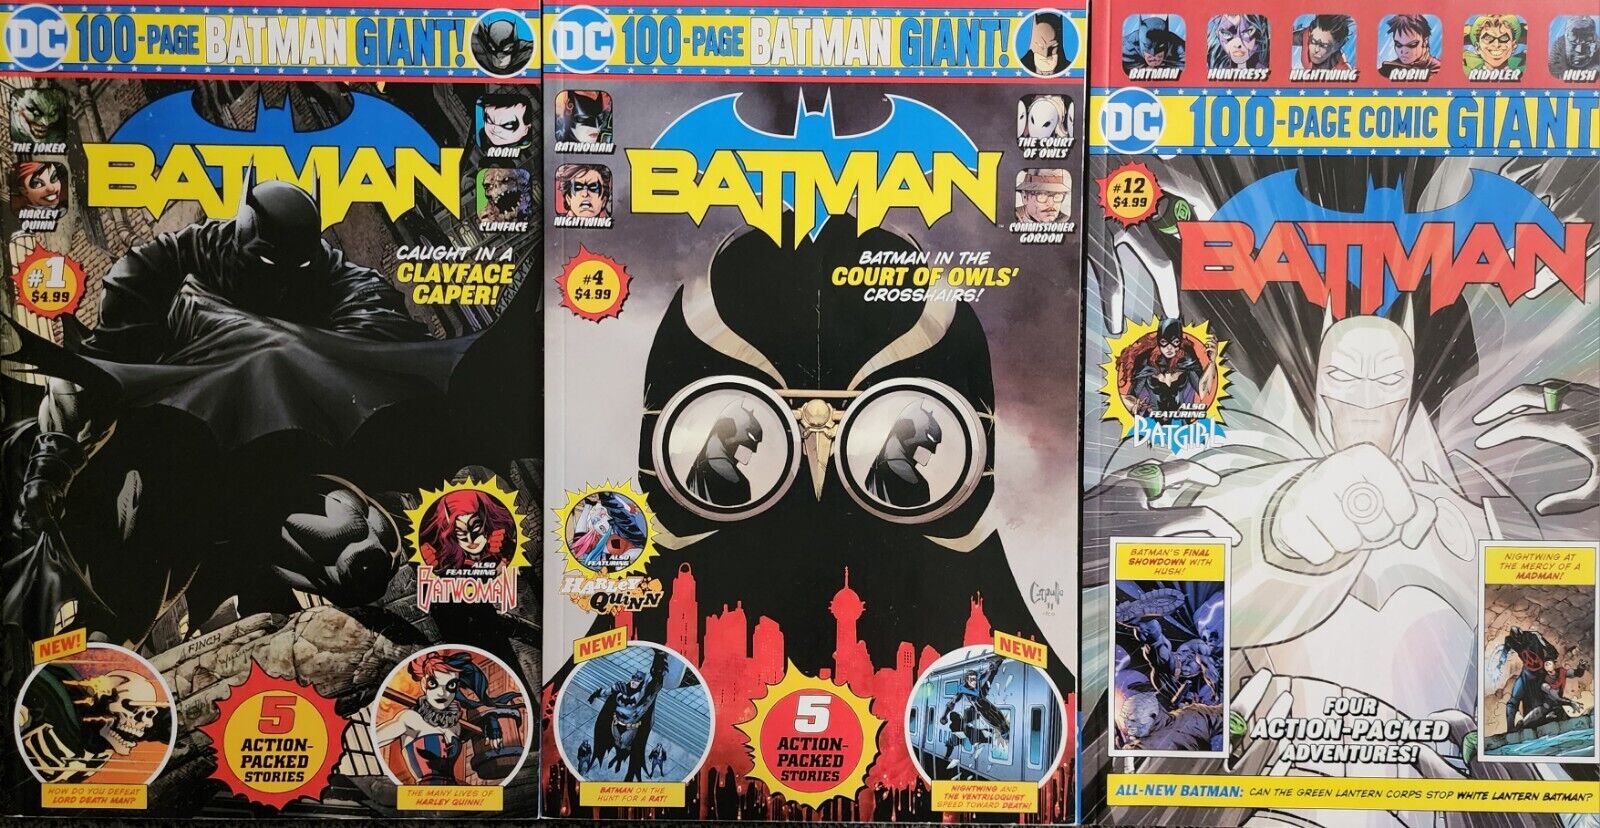 Batman Giant 1, 4, 12 DC Comic Book Lot Joker 2019 Batgirl KEY Nightwing Riddler